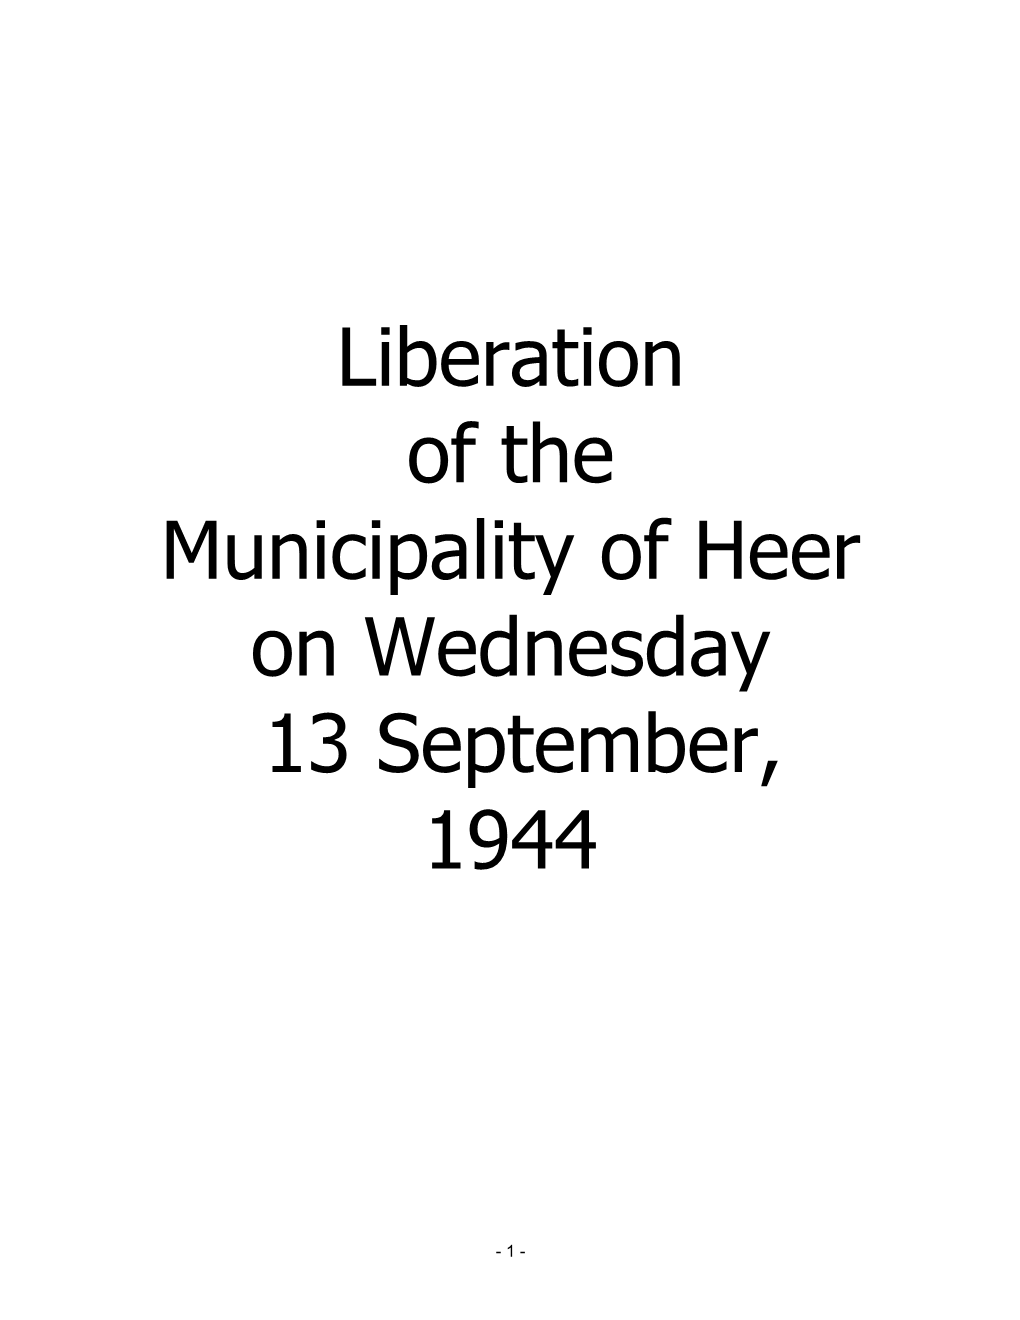 Liberation of Heer